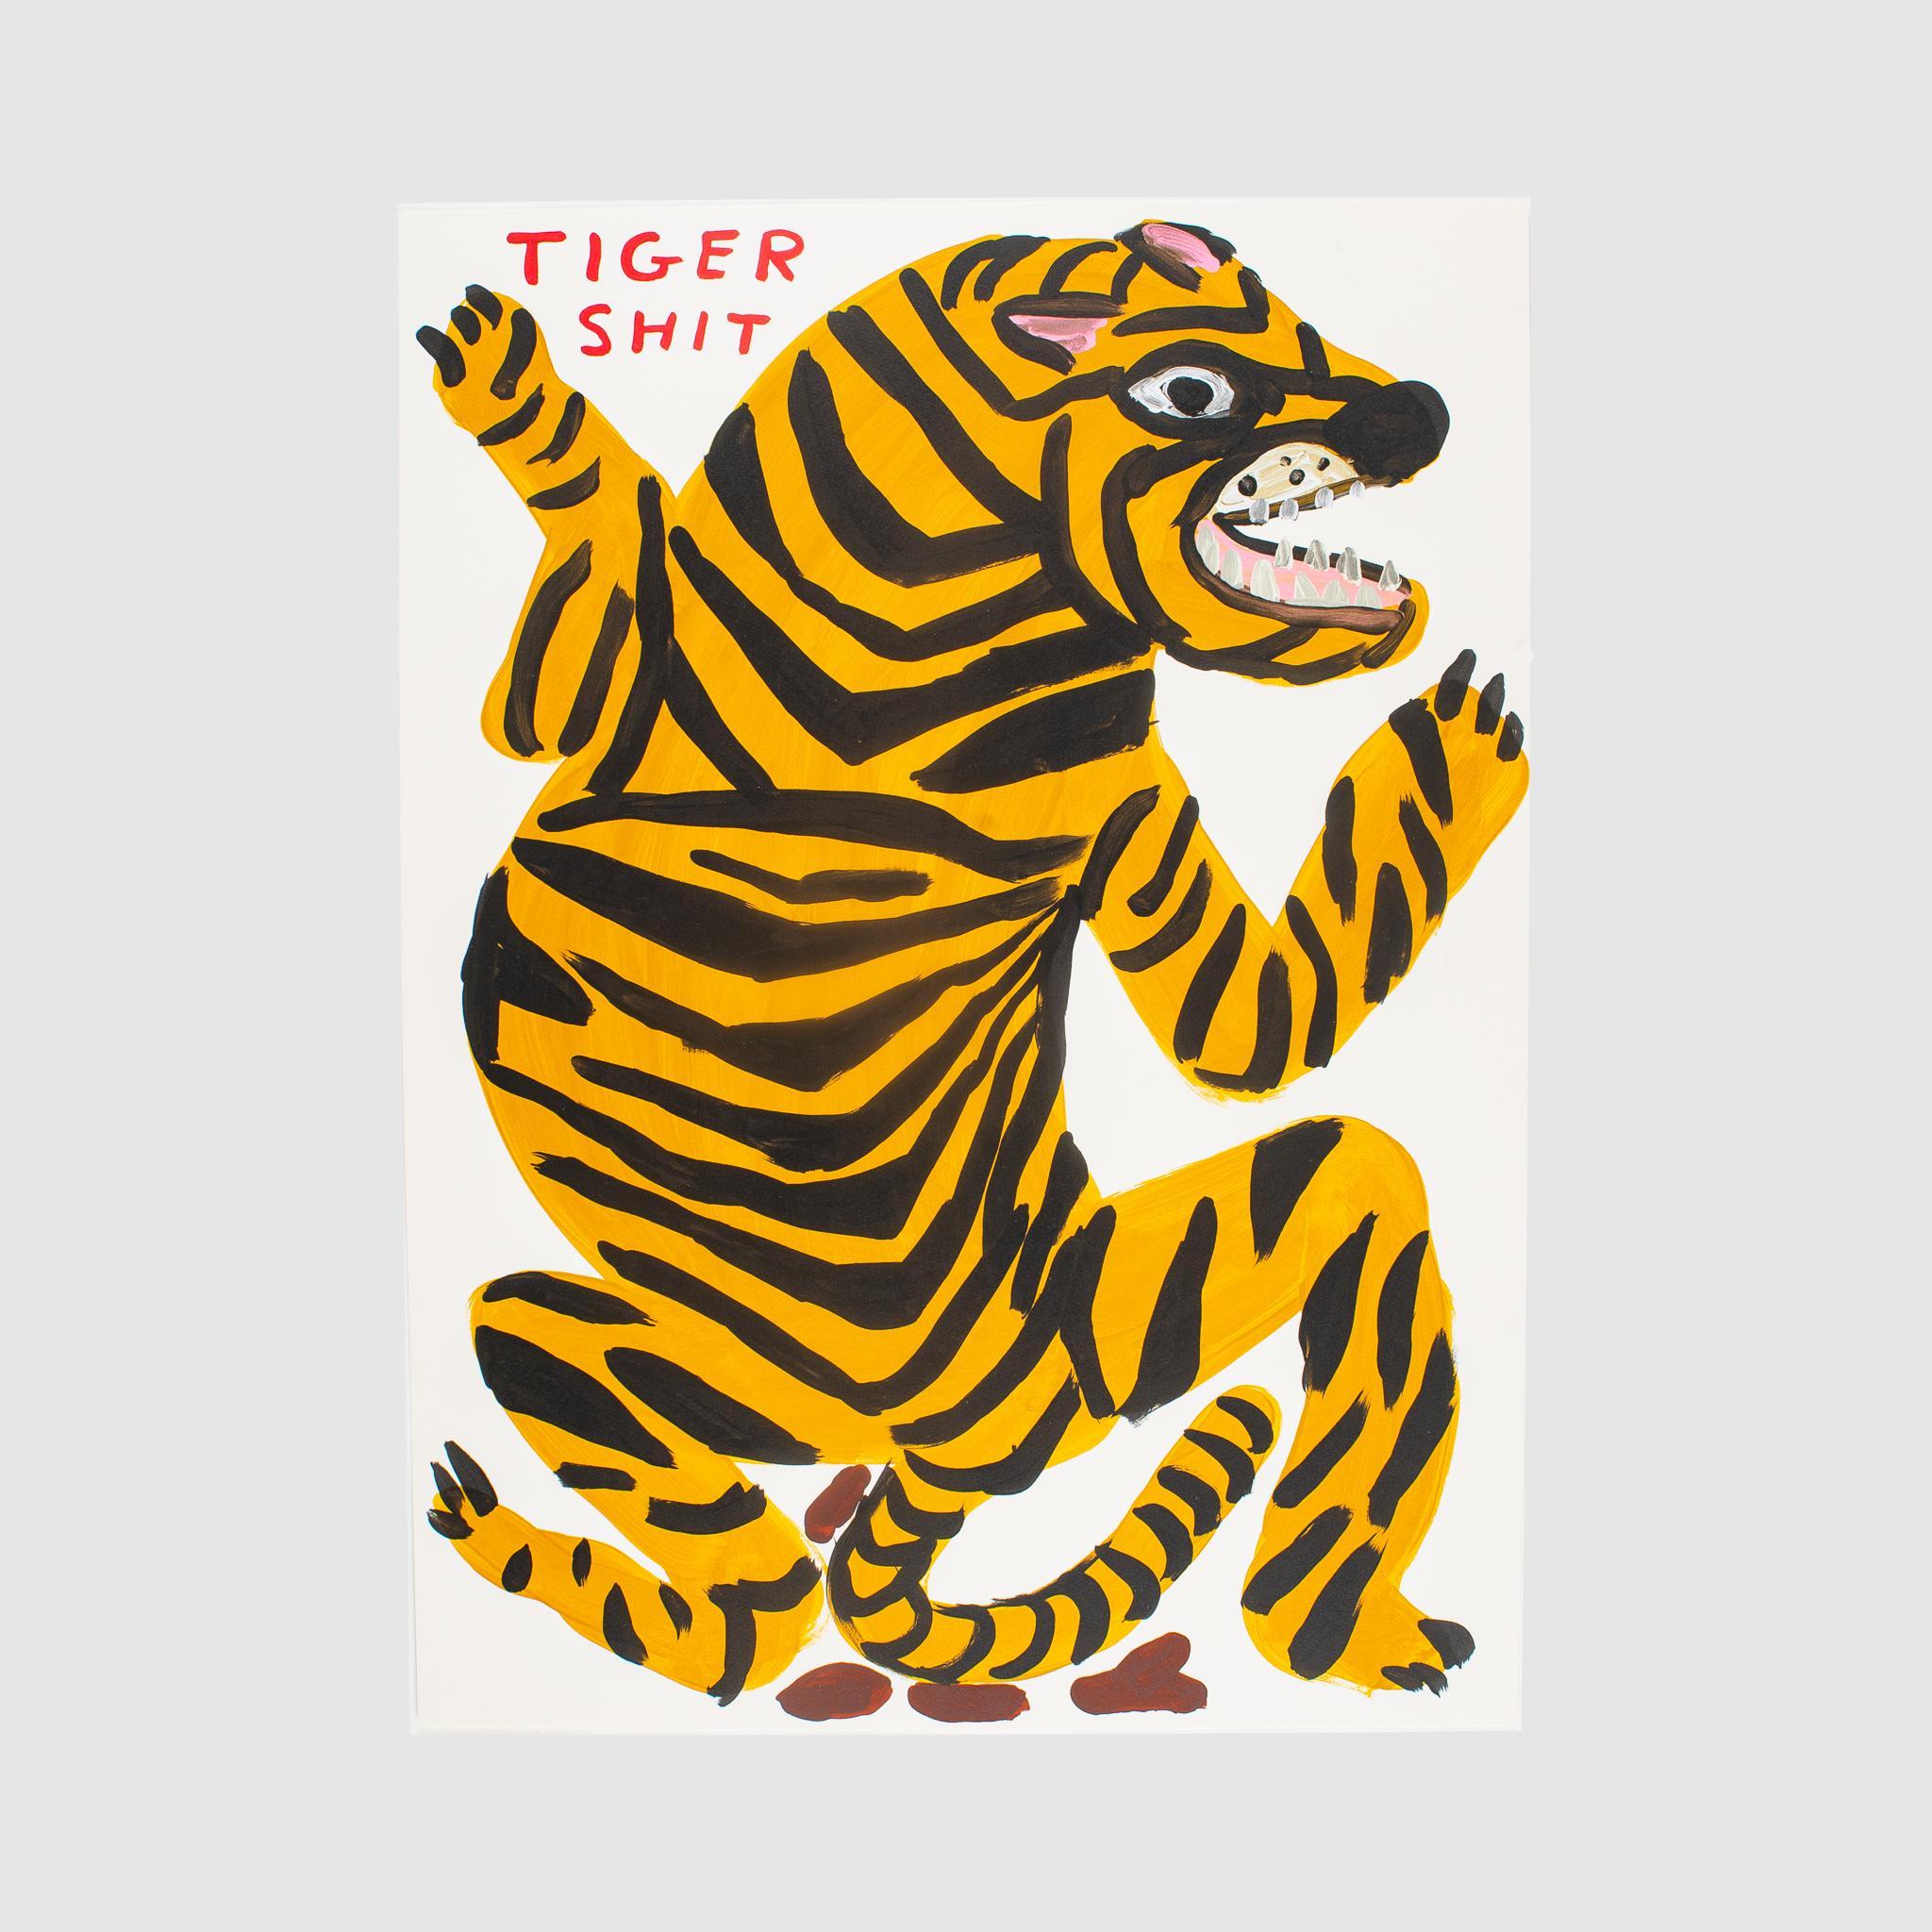 Tiger Shit - Print by David Shrigley